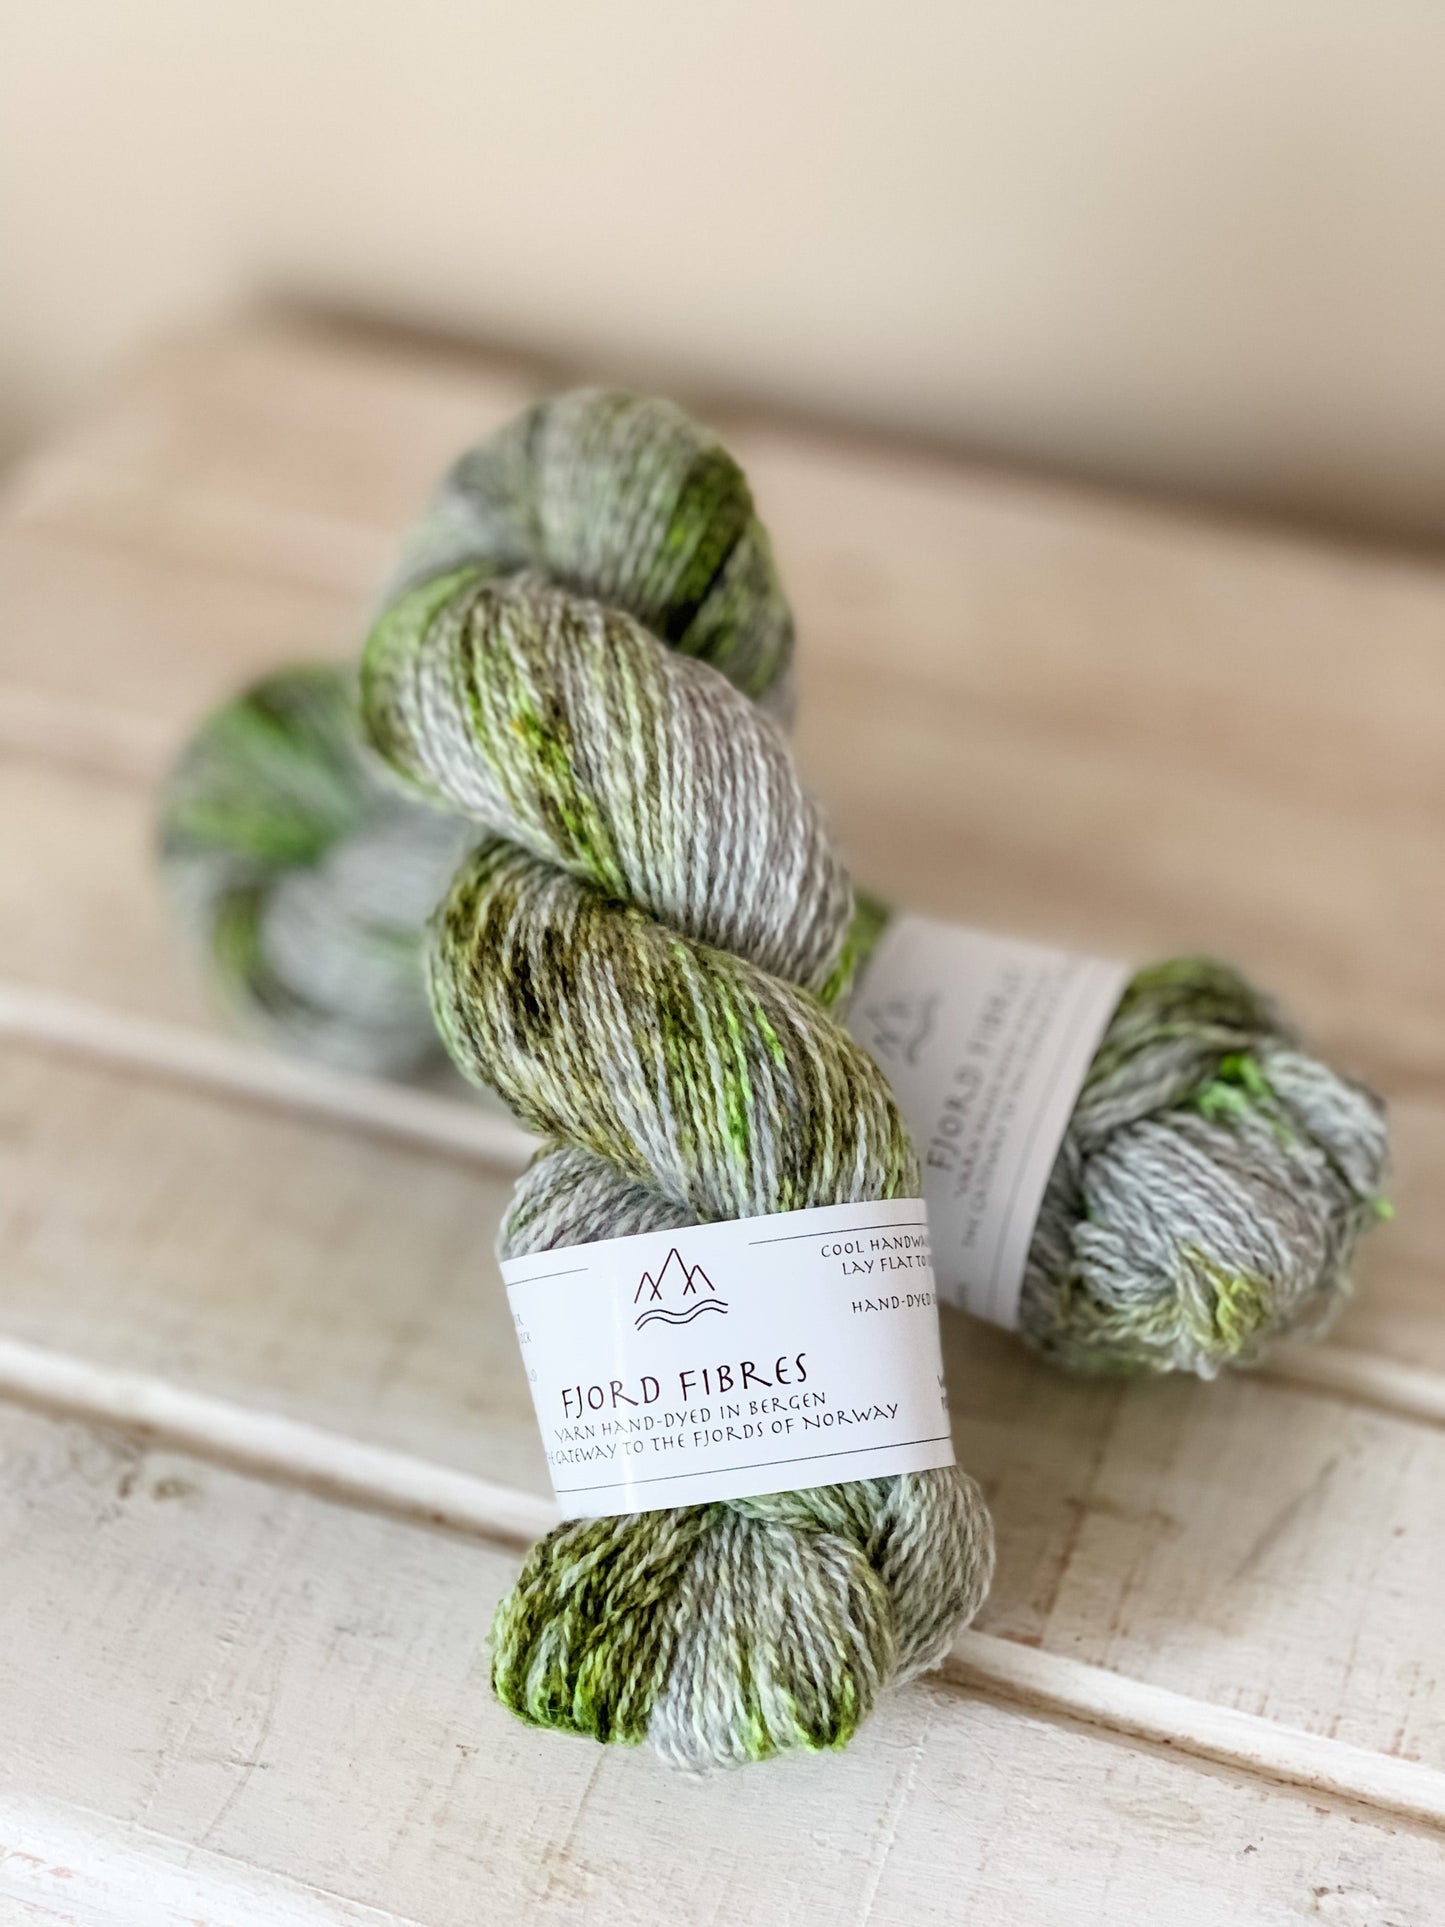 Rainforest Fade set Set - Trollfjord Sock - Variegated Yarn - Hand dyed yarn